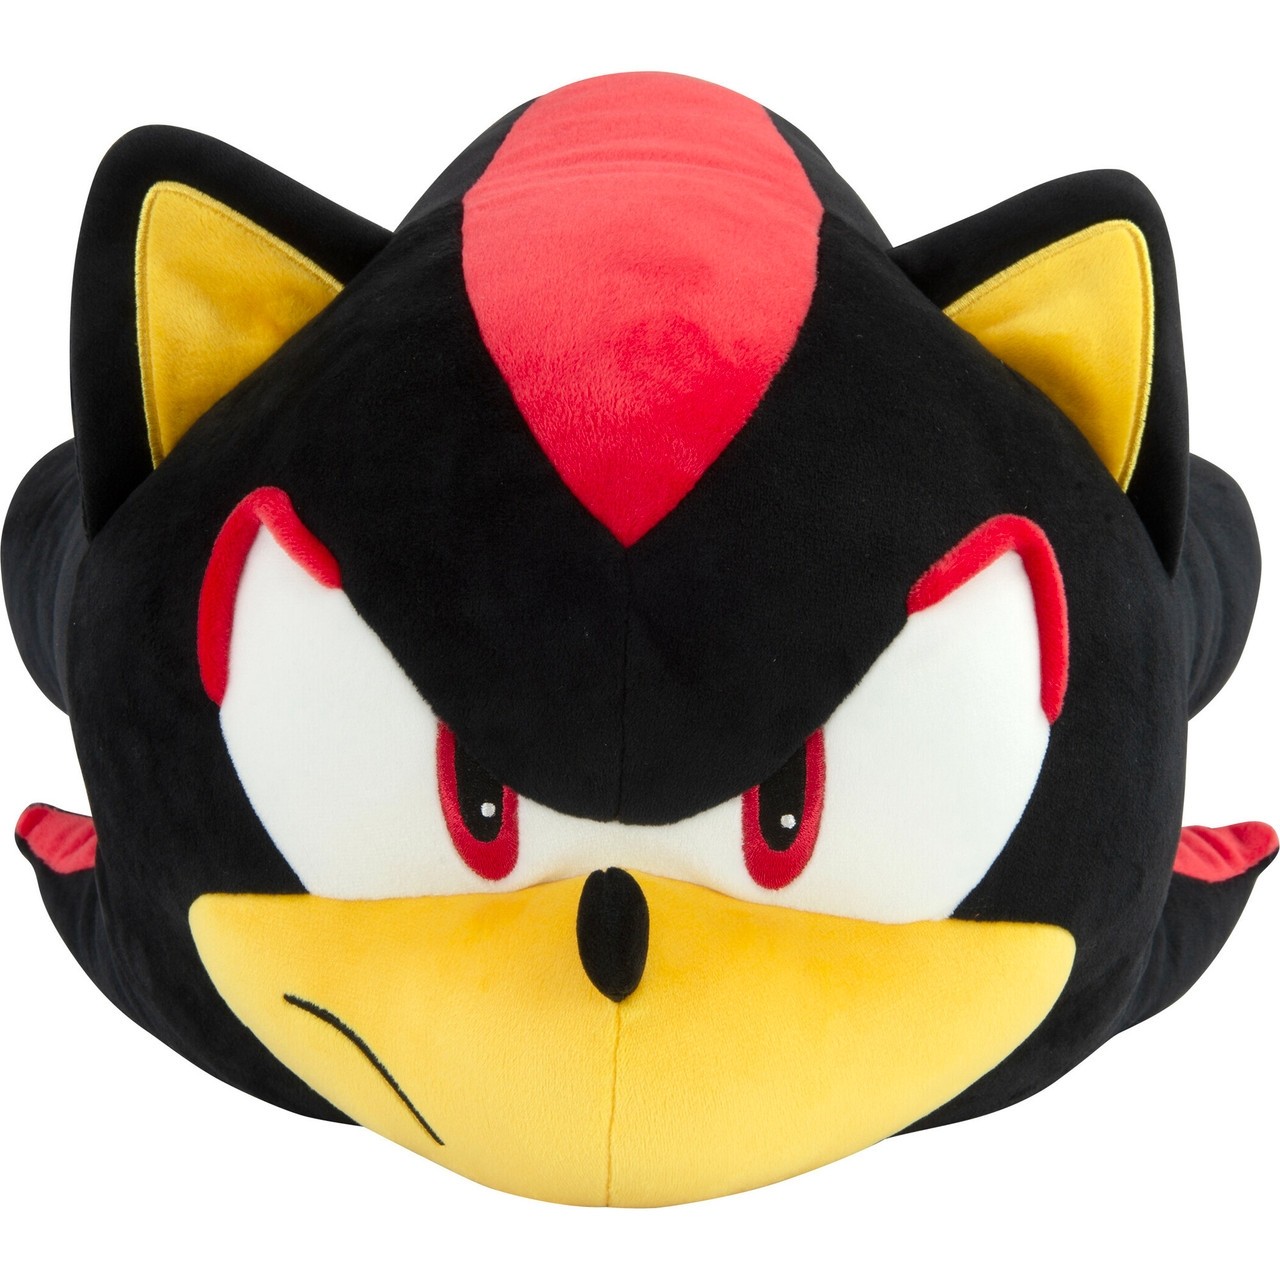 Sonic the Hedgehog - Shadow the Hedgehog Mega Mocchi 15 Inch Plush